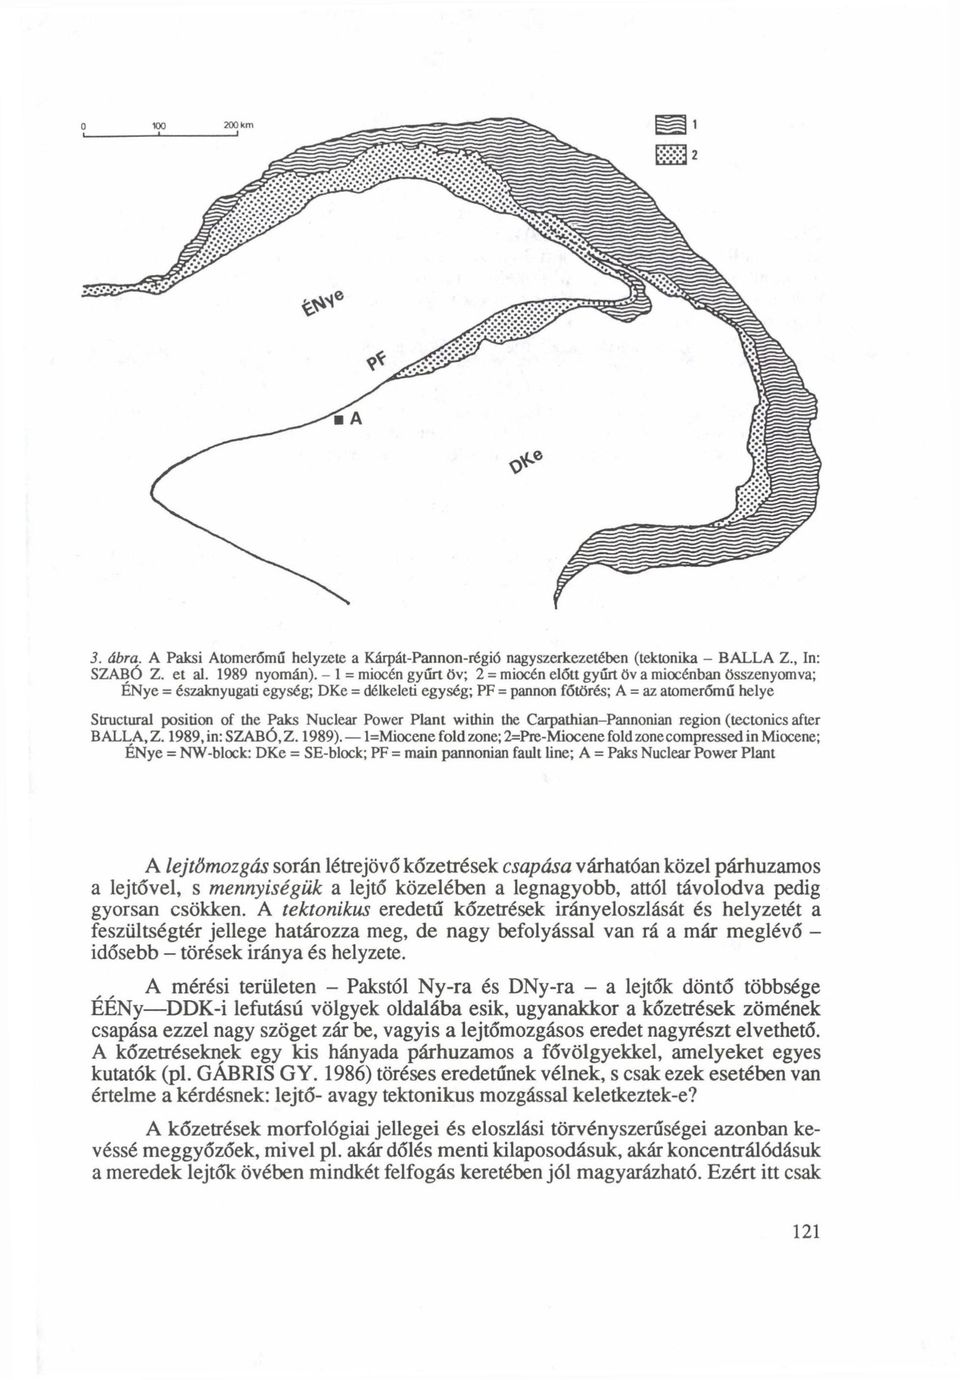 Paks Nuclear Power Plant within the Carpathian-Pannonian region (tectonics after BALLA,Z. 1989, in: SZABÓ, Z. 1989).